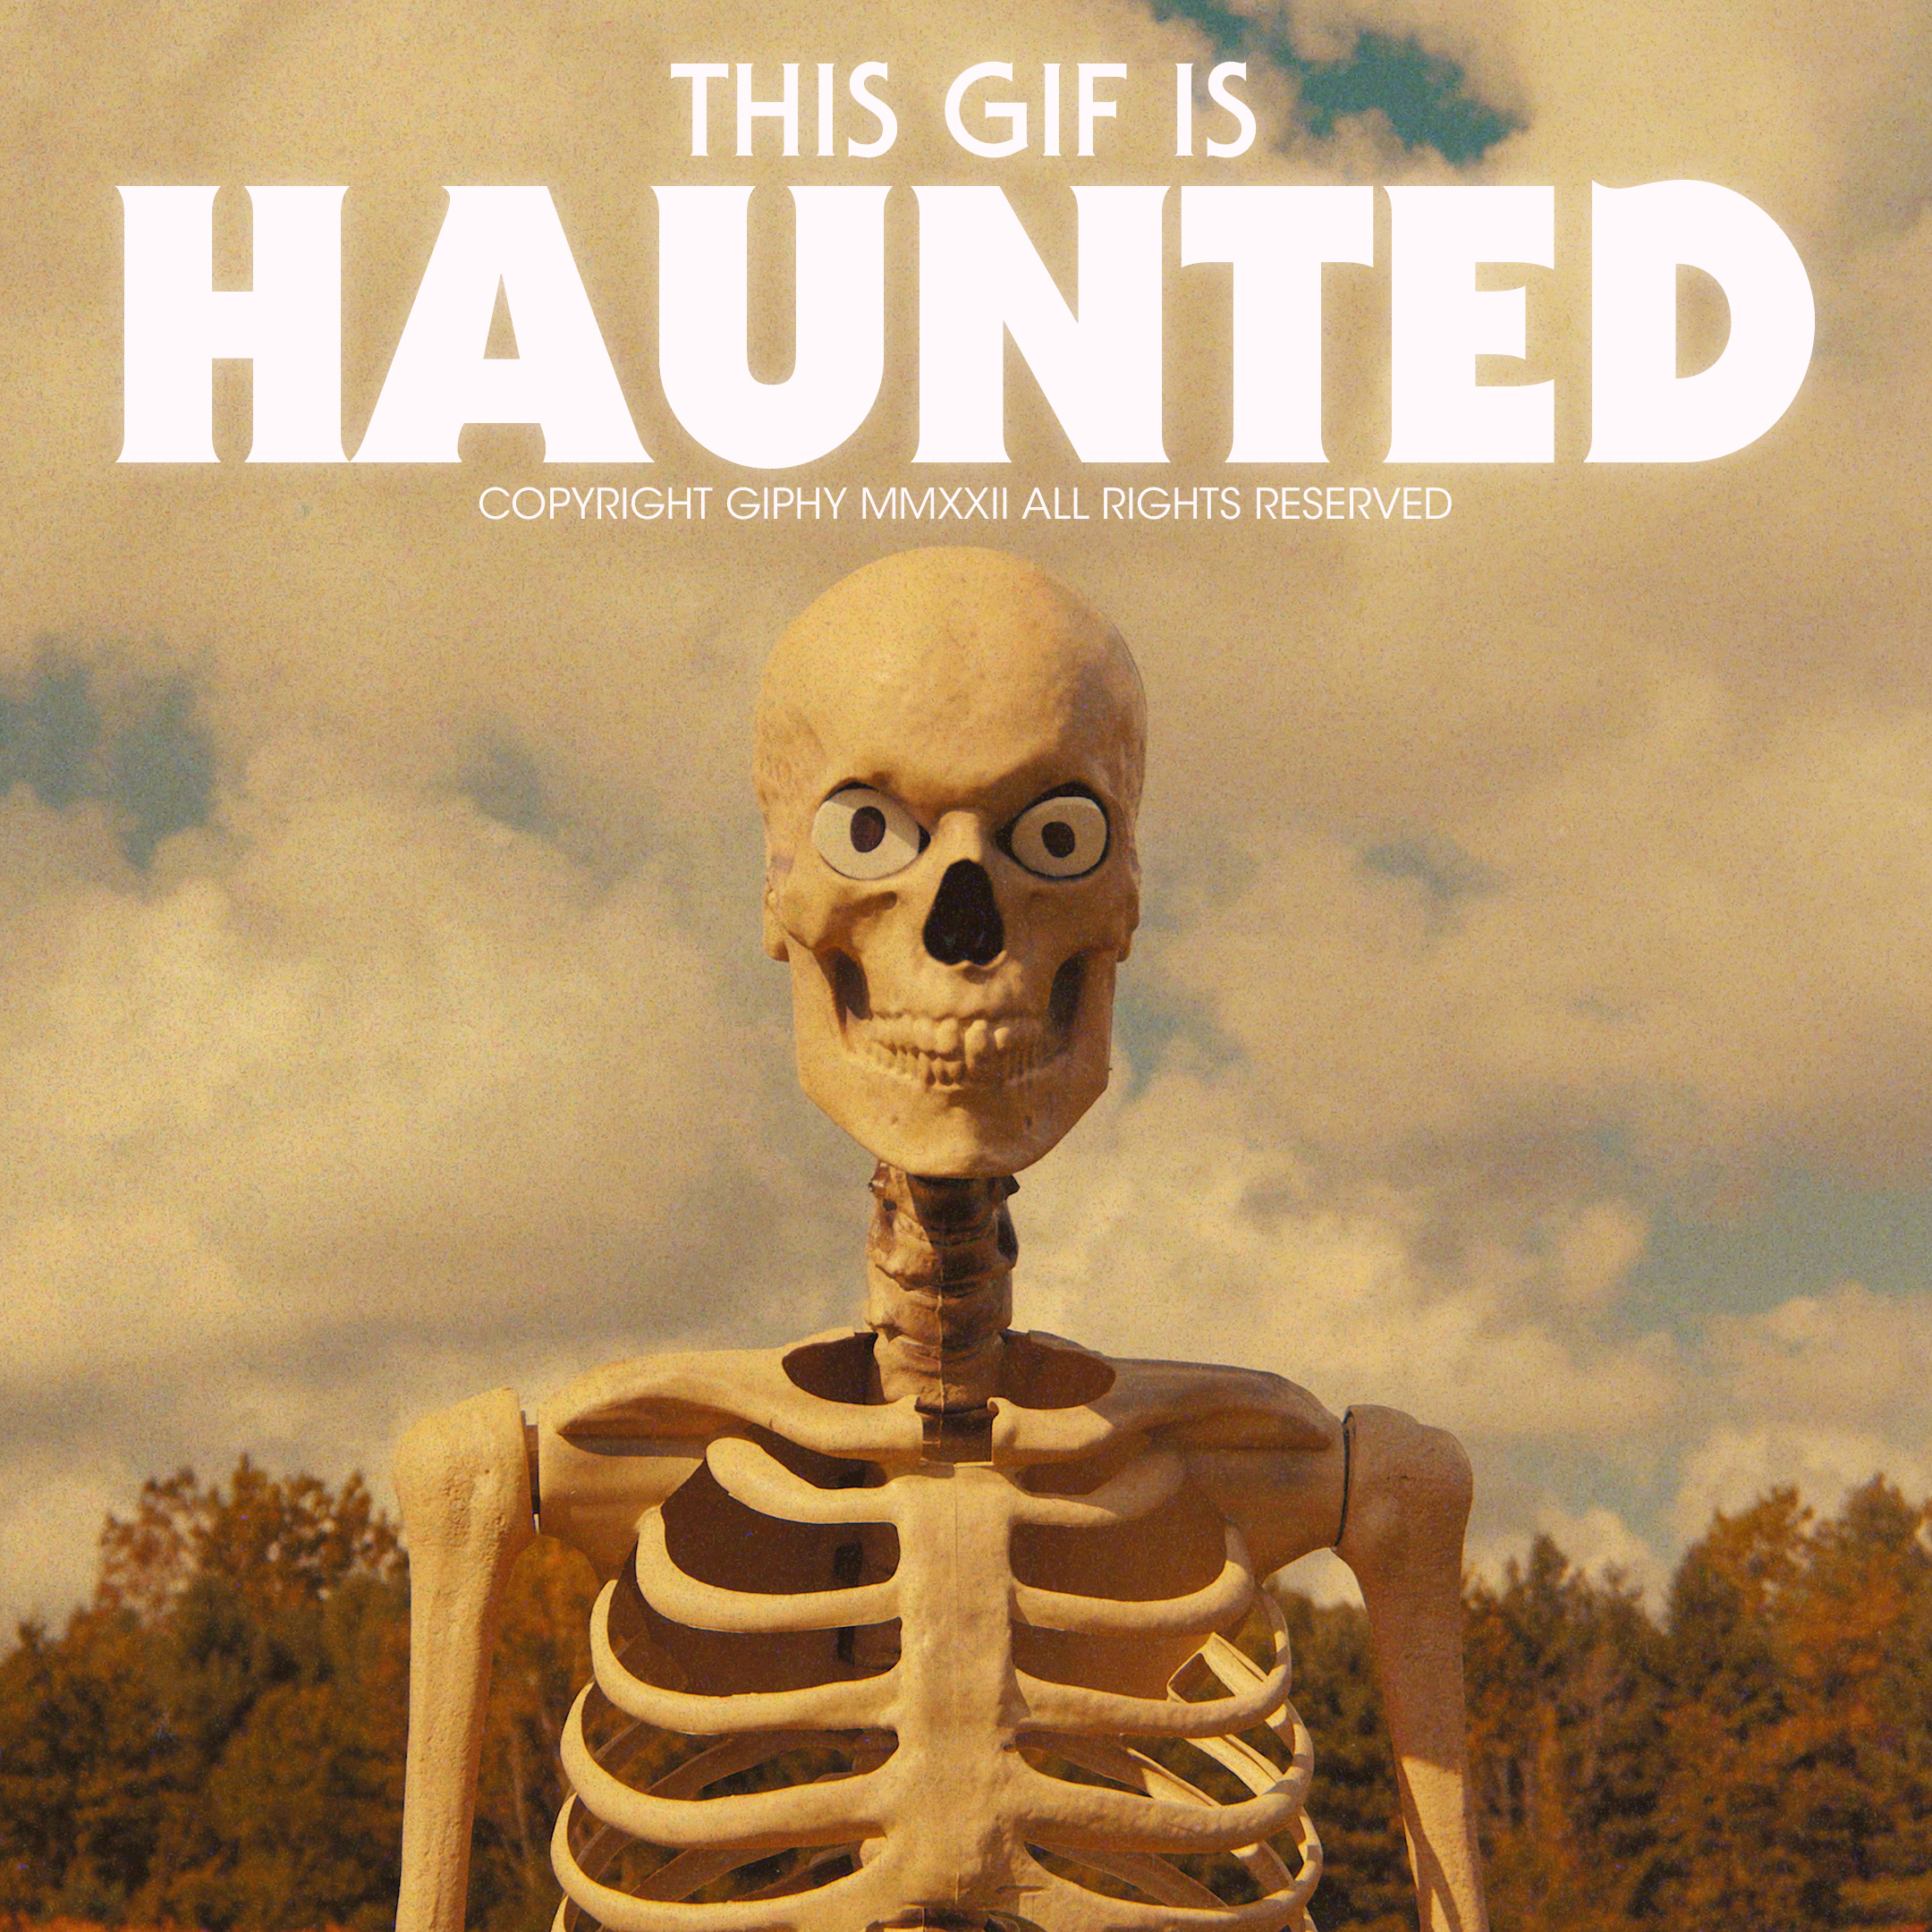 Risada do esqueleto on Make a GIF